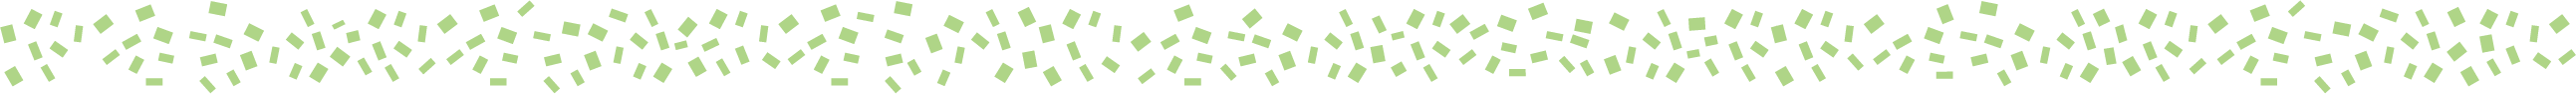 green salt pattern